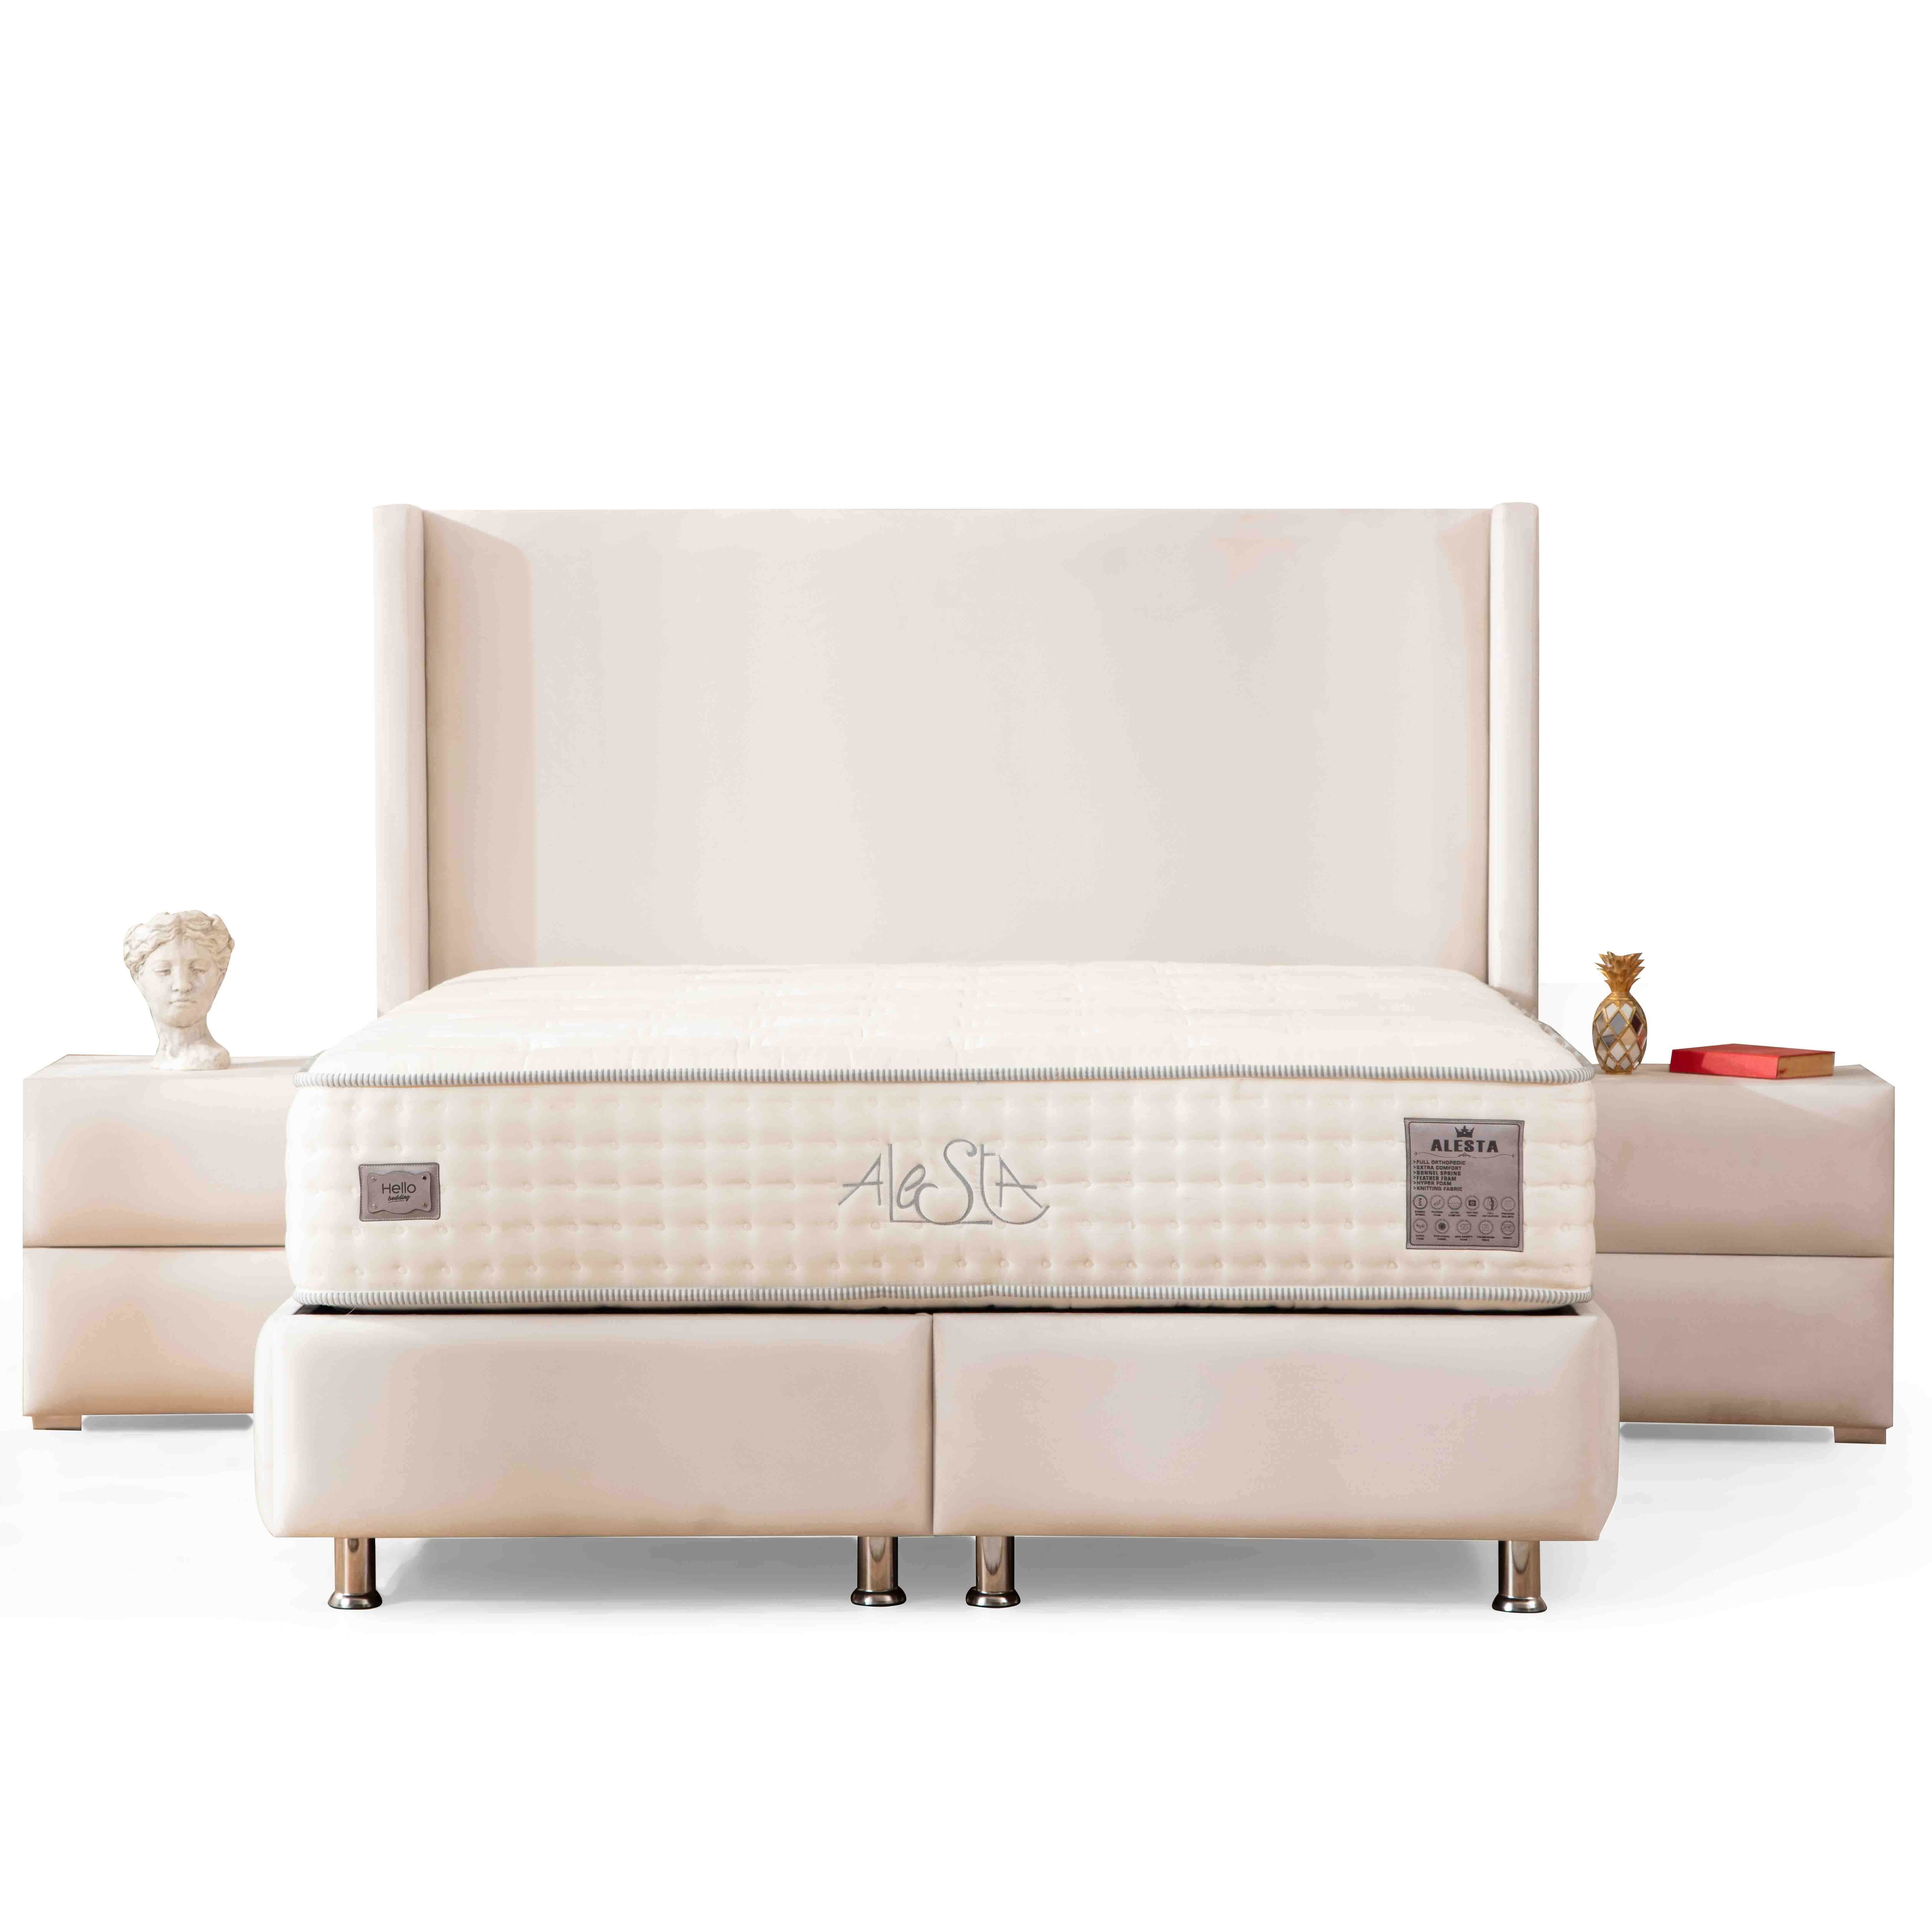 Lucca Bed Sets 120*200